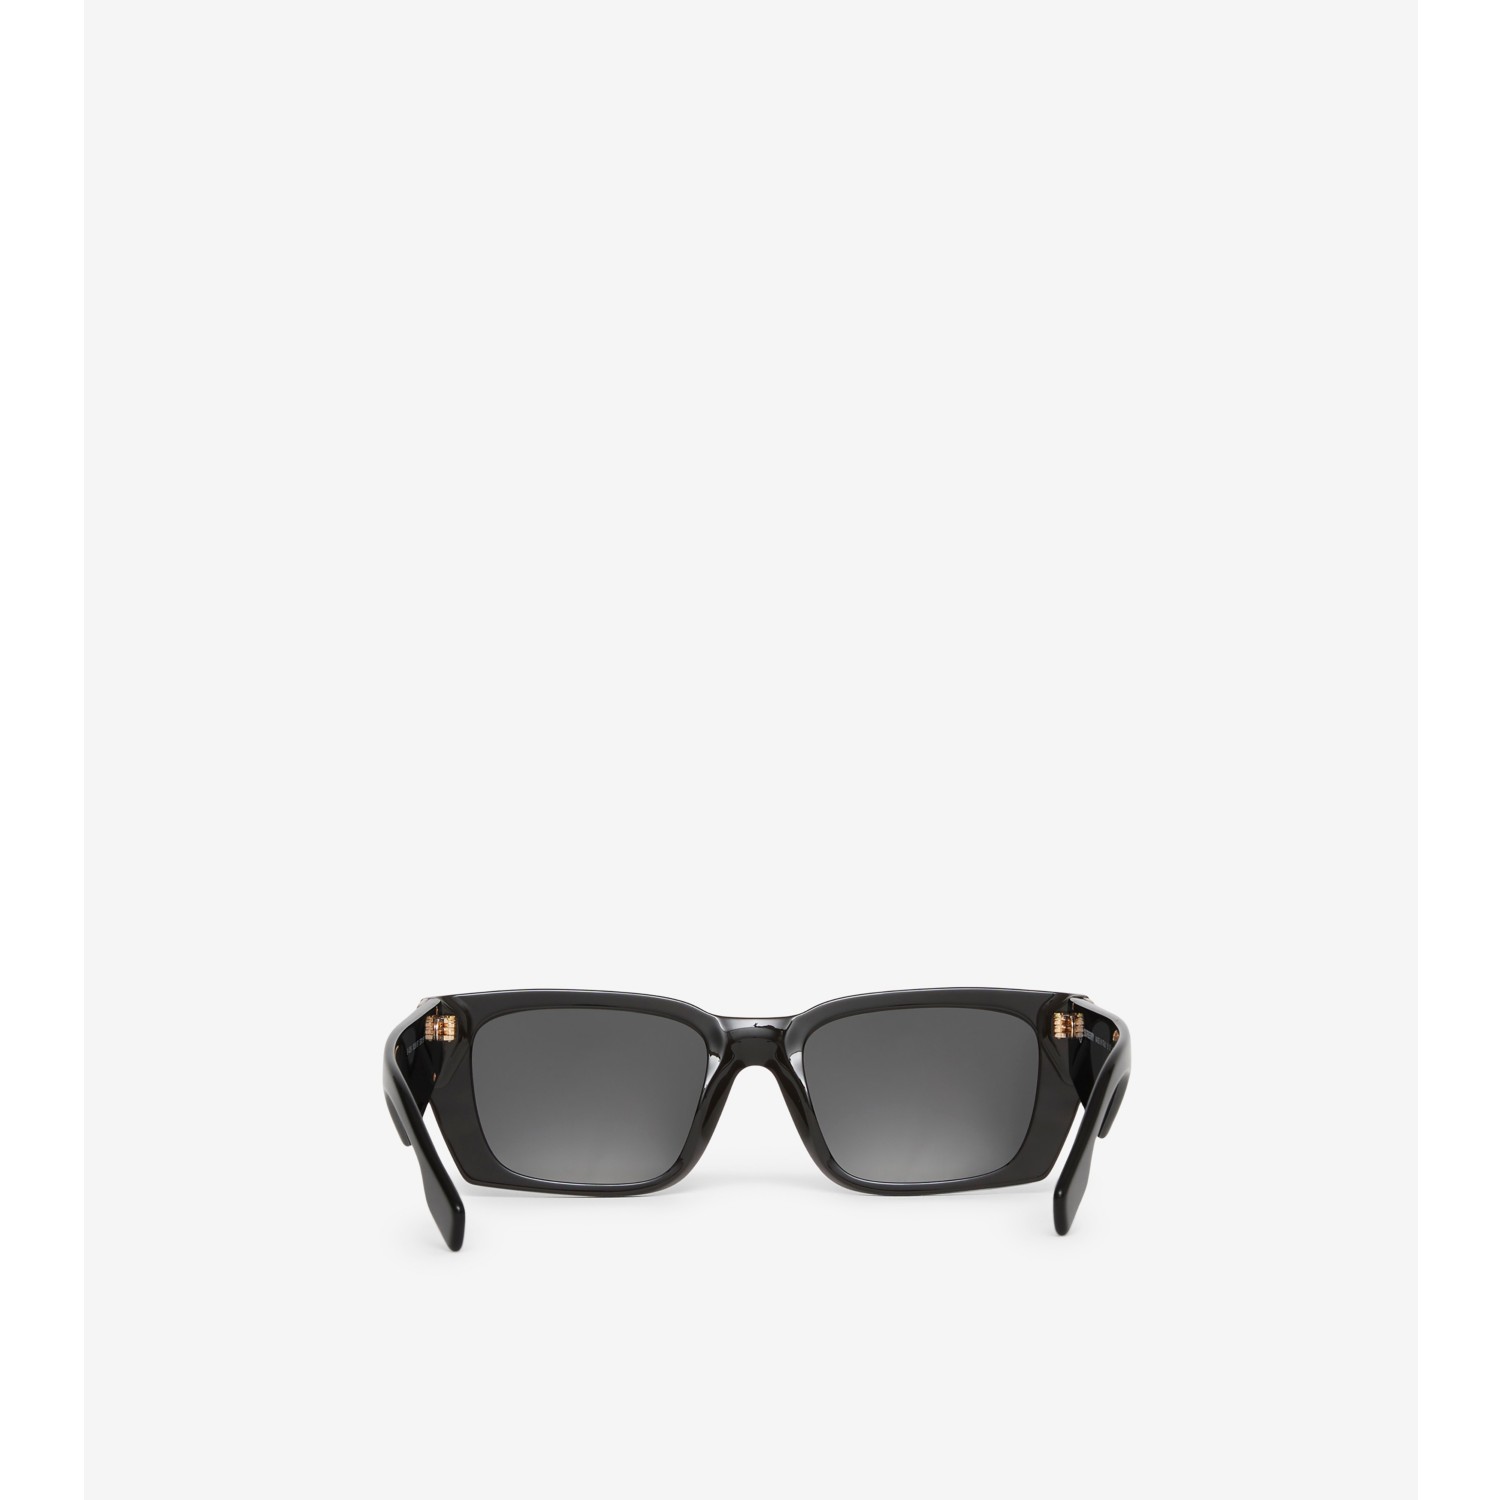 B Motif Rectangular Frame Sunglasses with Chain in Black - Women